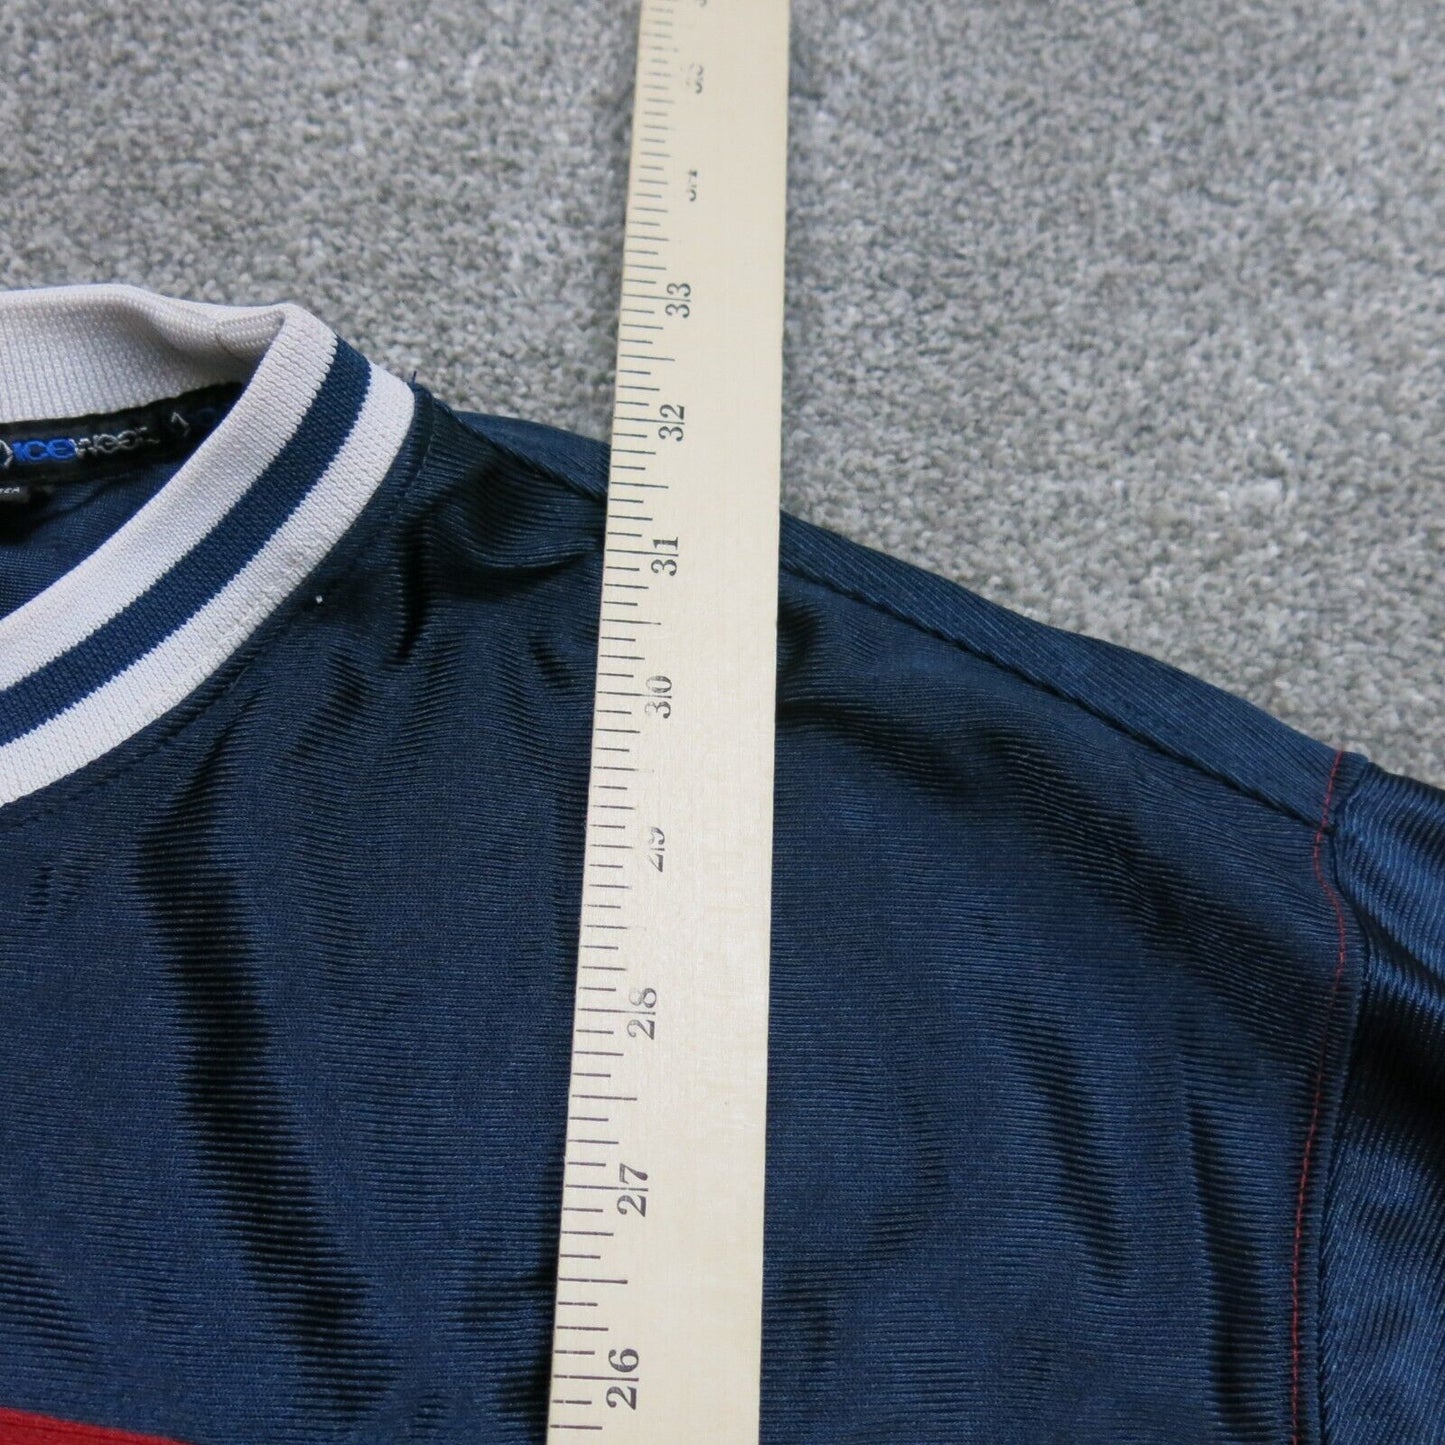 ICEWEAR Hockey Sports Jersey Shirt Adult Size Large Navy Burgundy Short Sleeve